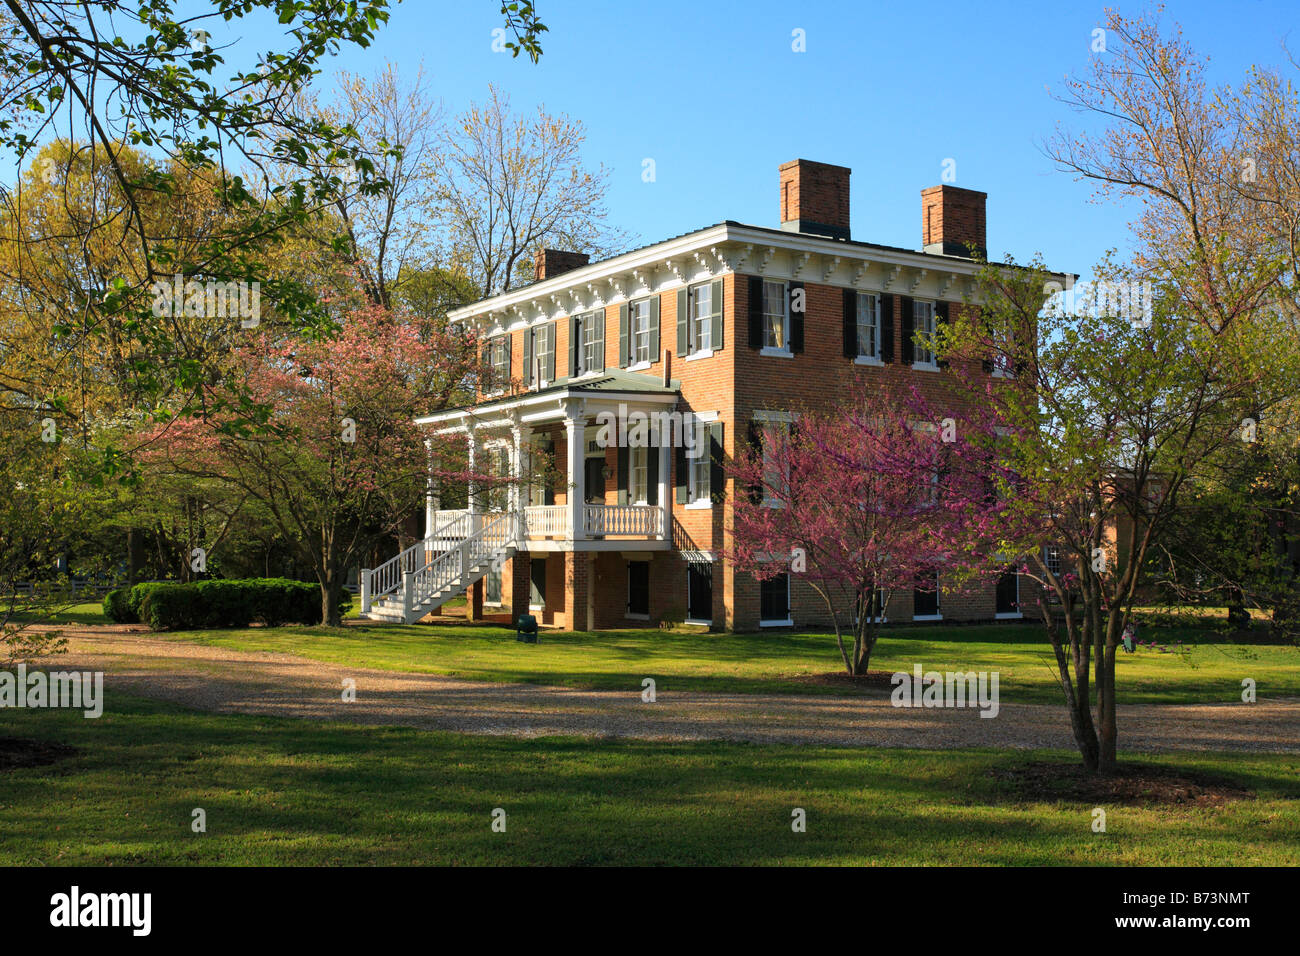 Lee Hall Mansion, Newport News, Virginia, USA Stock Photo - Alamy